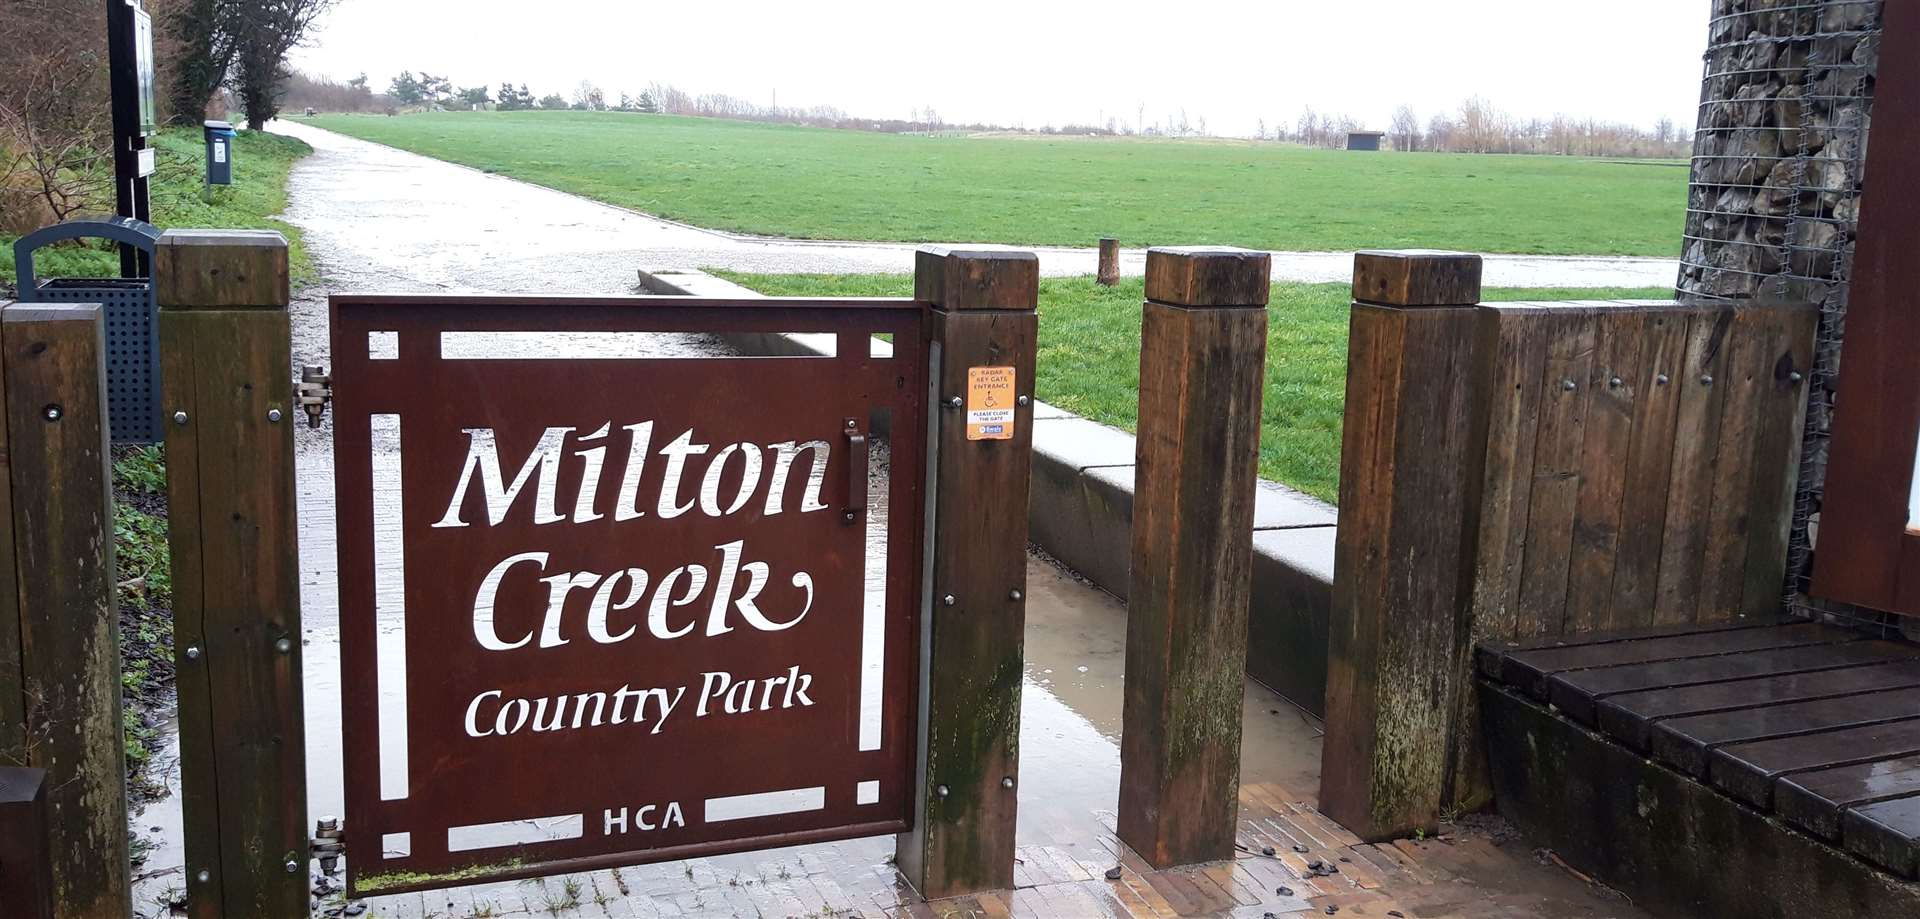 Milton Creek Country Park, near Sittingbourne